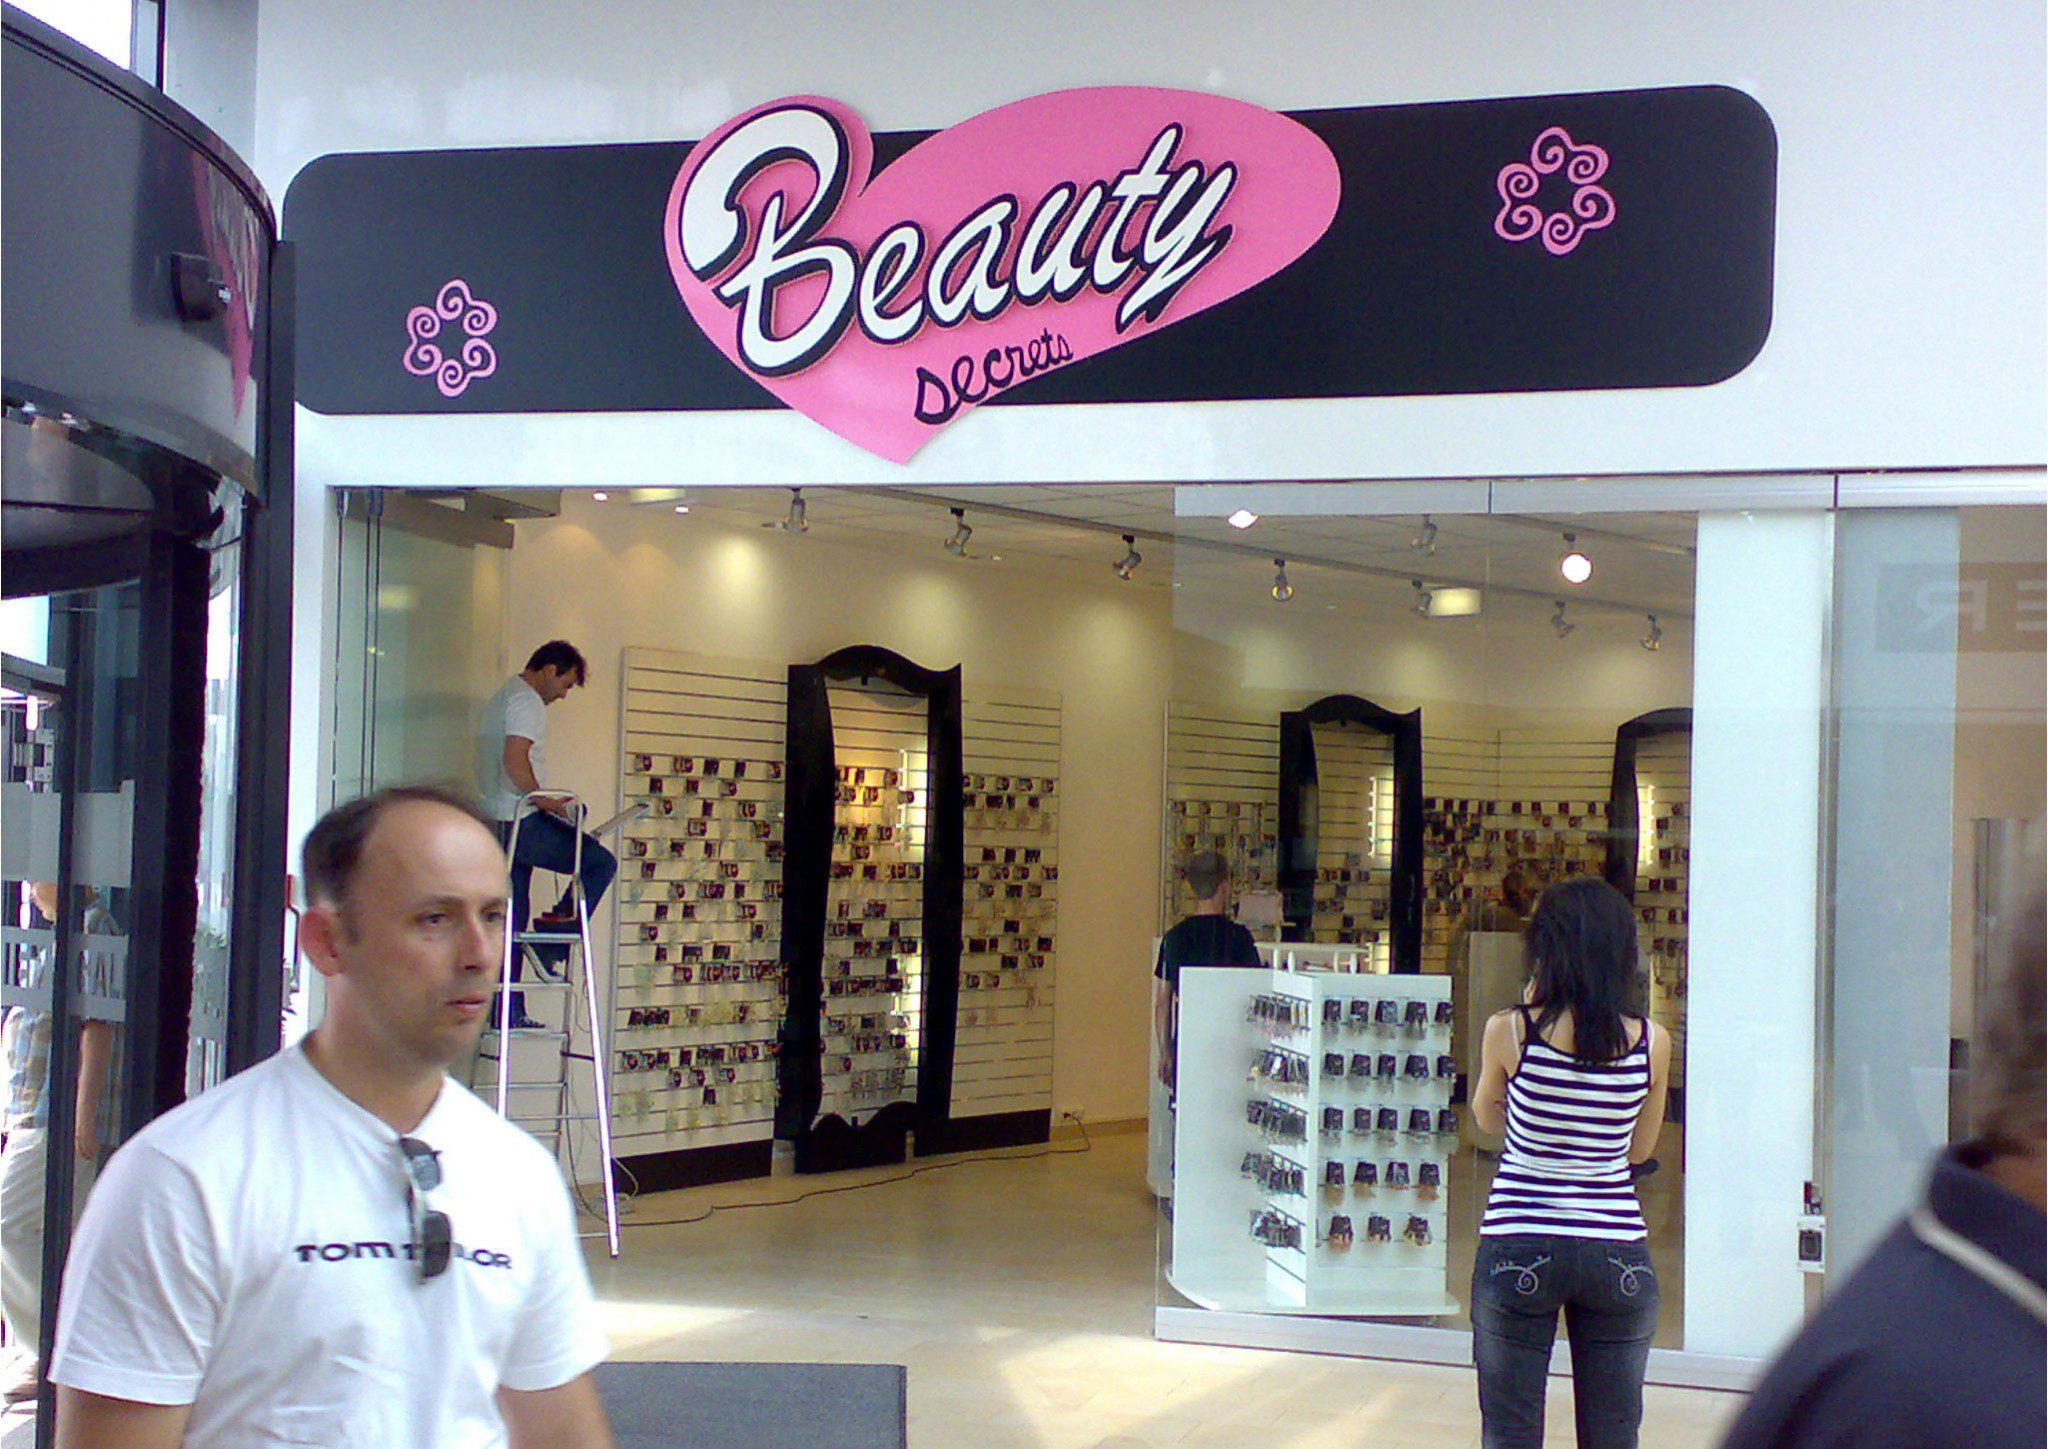 Logo and manual - Beauty secrets